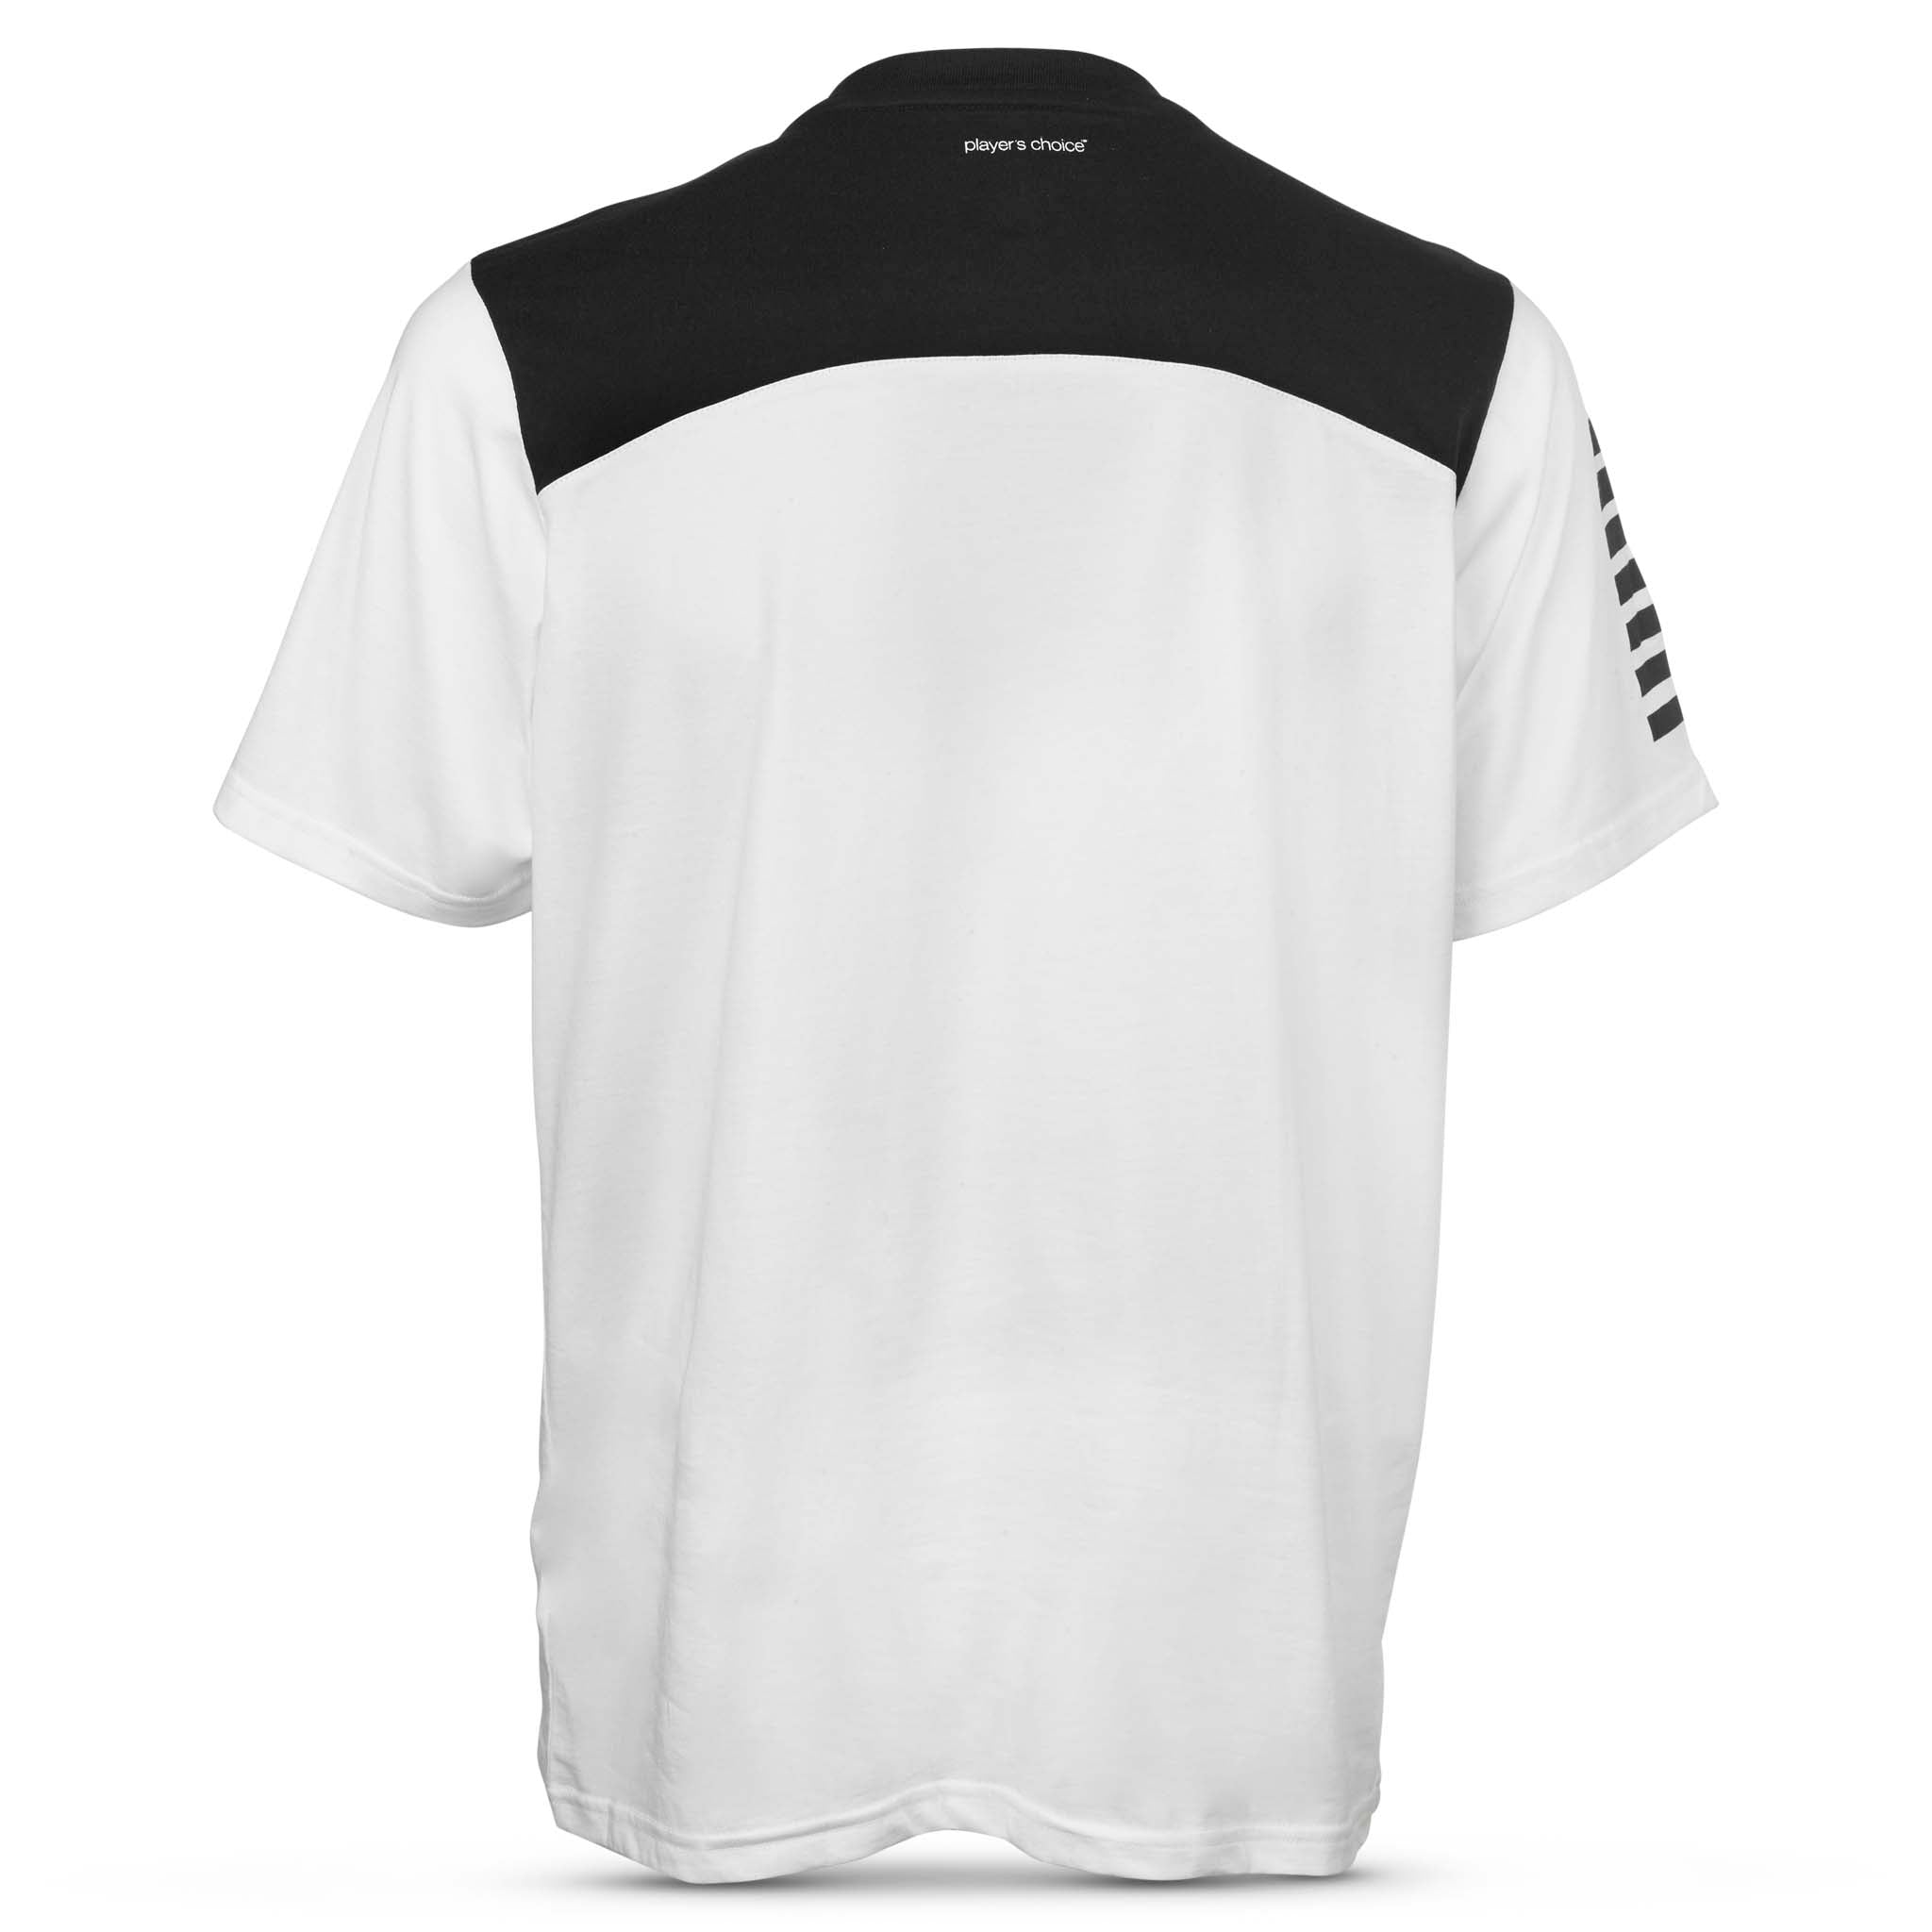 Oxford T-shirt #färg_ #färg_vit/svart #färg_vit/svart